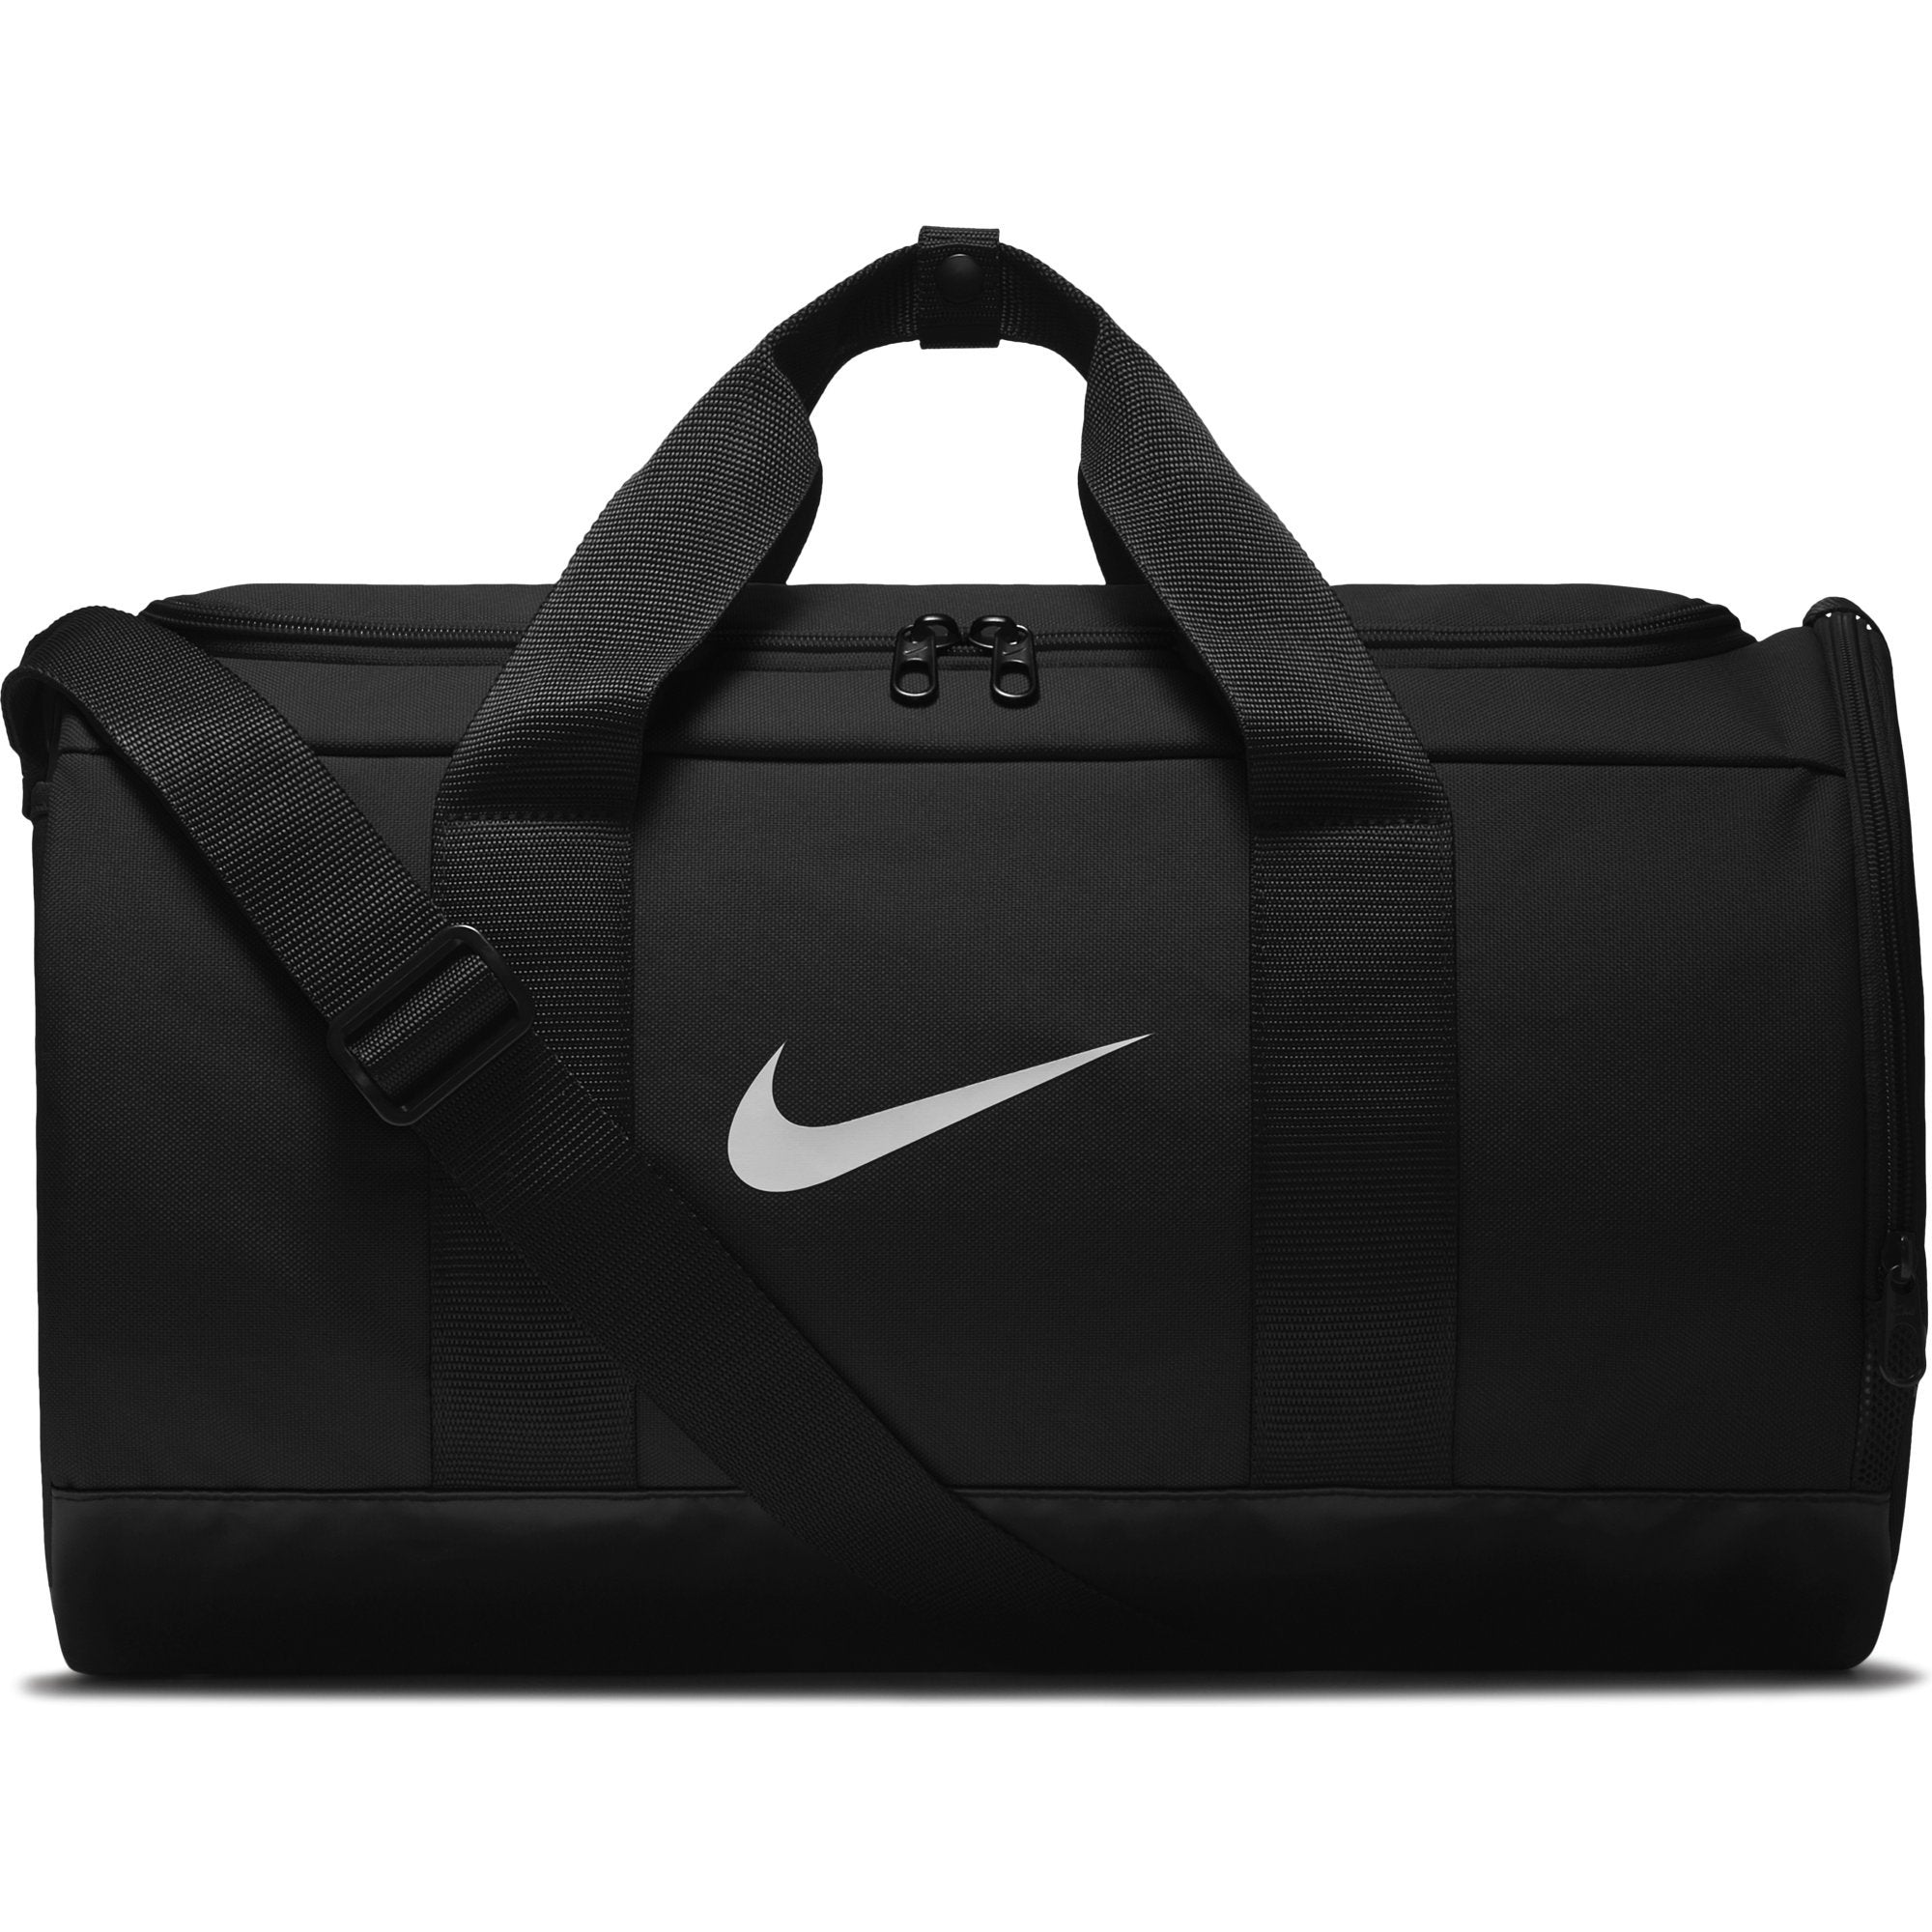 Черная спортивная сумка. Черная сумка Nike Duffle. Сумка найк спортивная женская черная. Теннисная сумка найк. Сумка Nike 2009 Black.